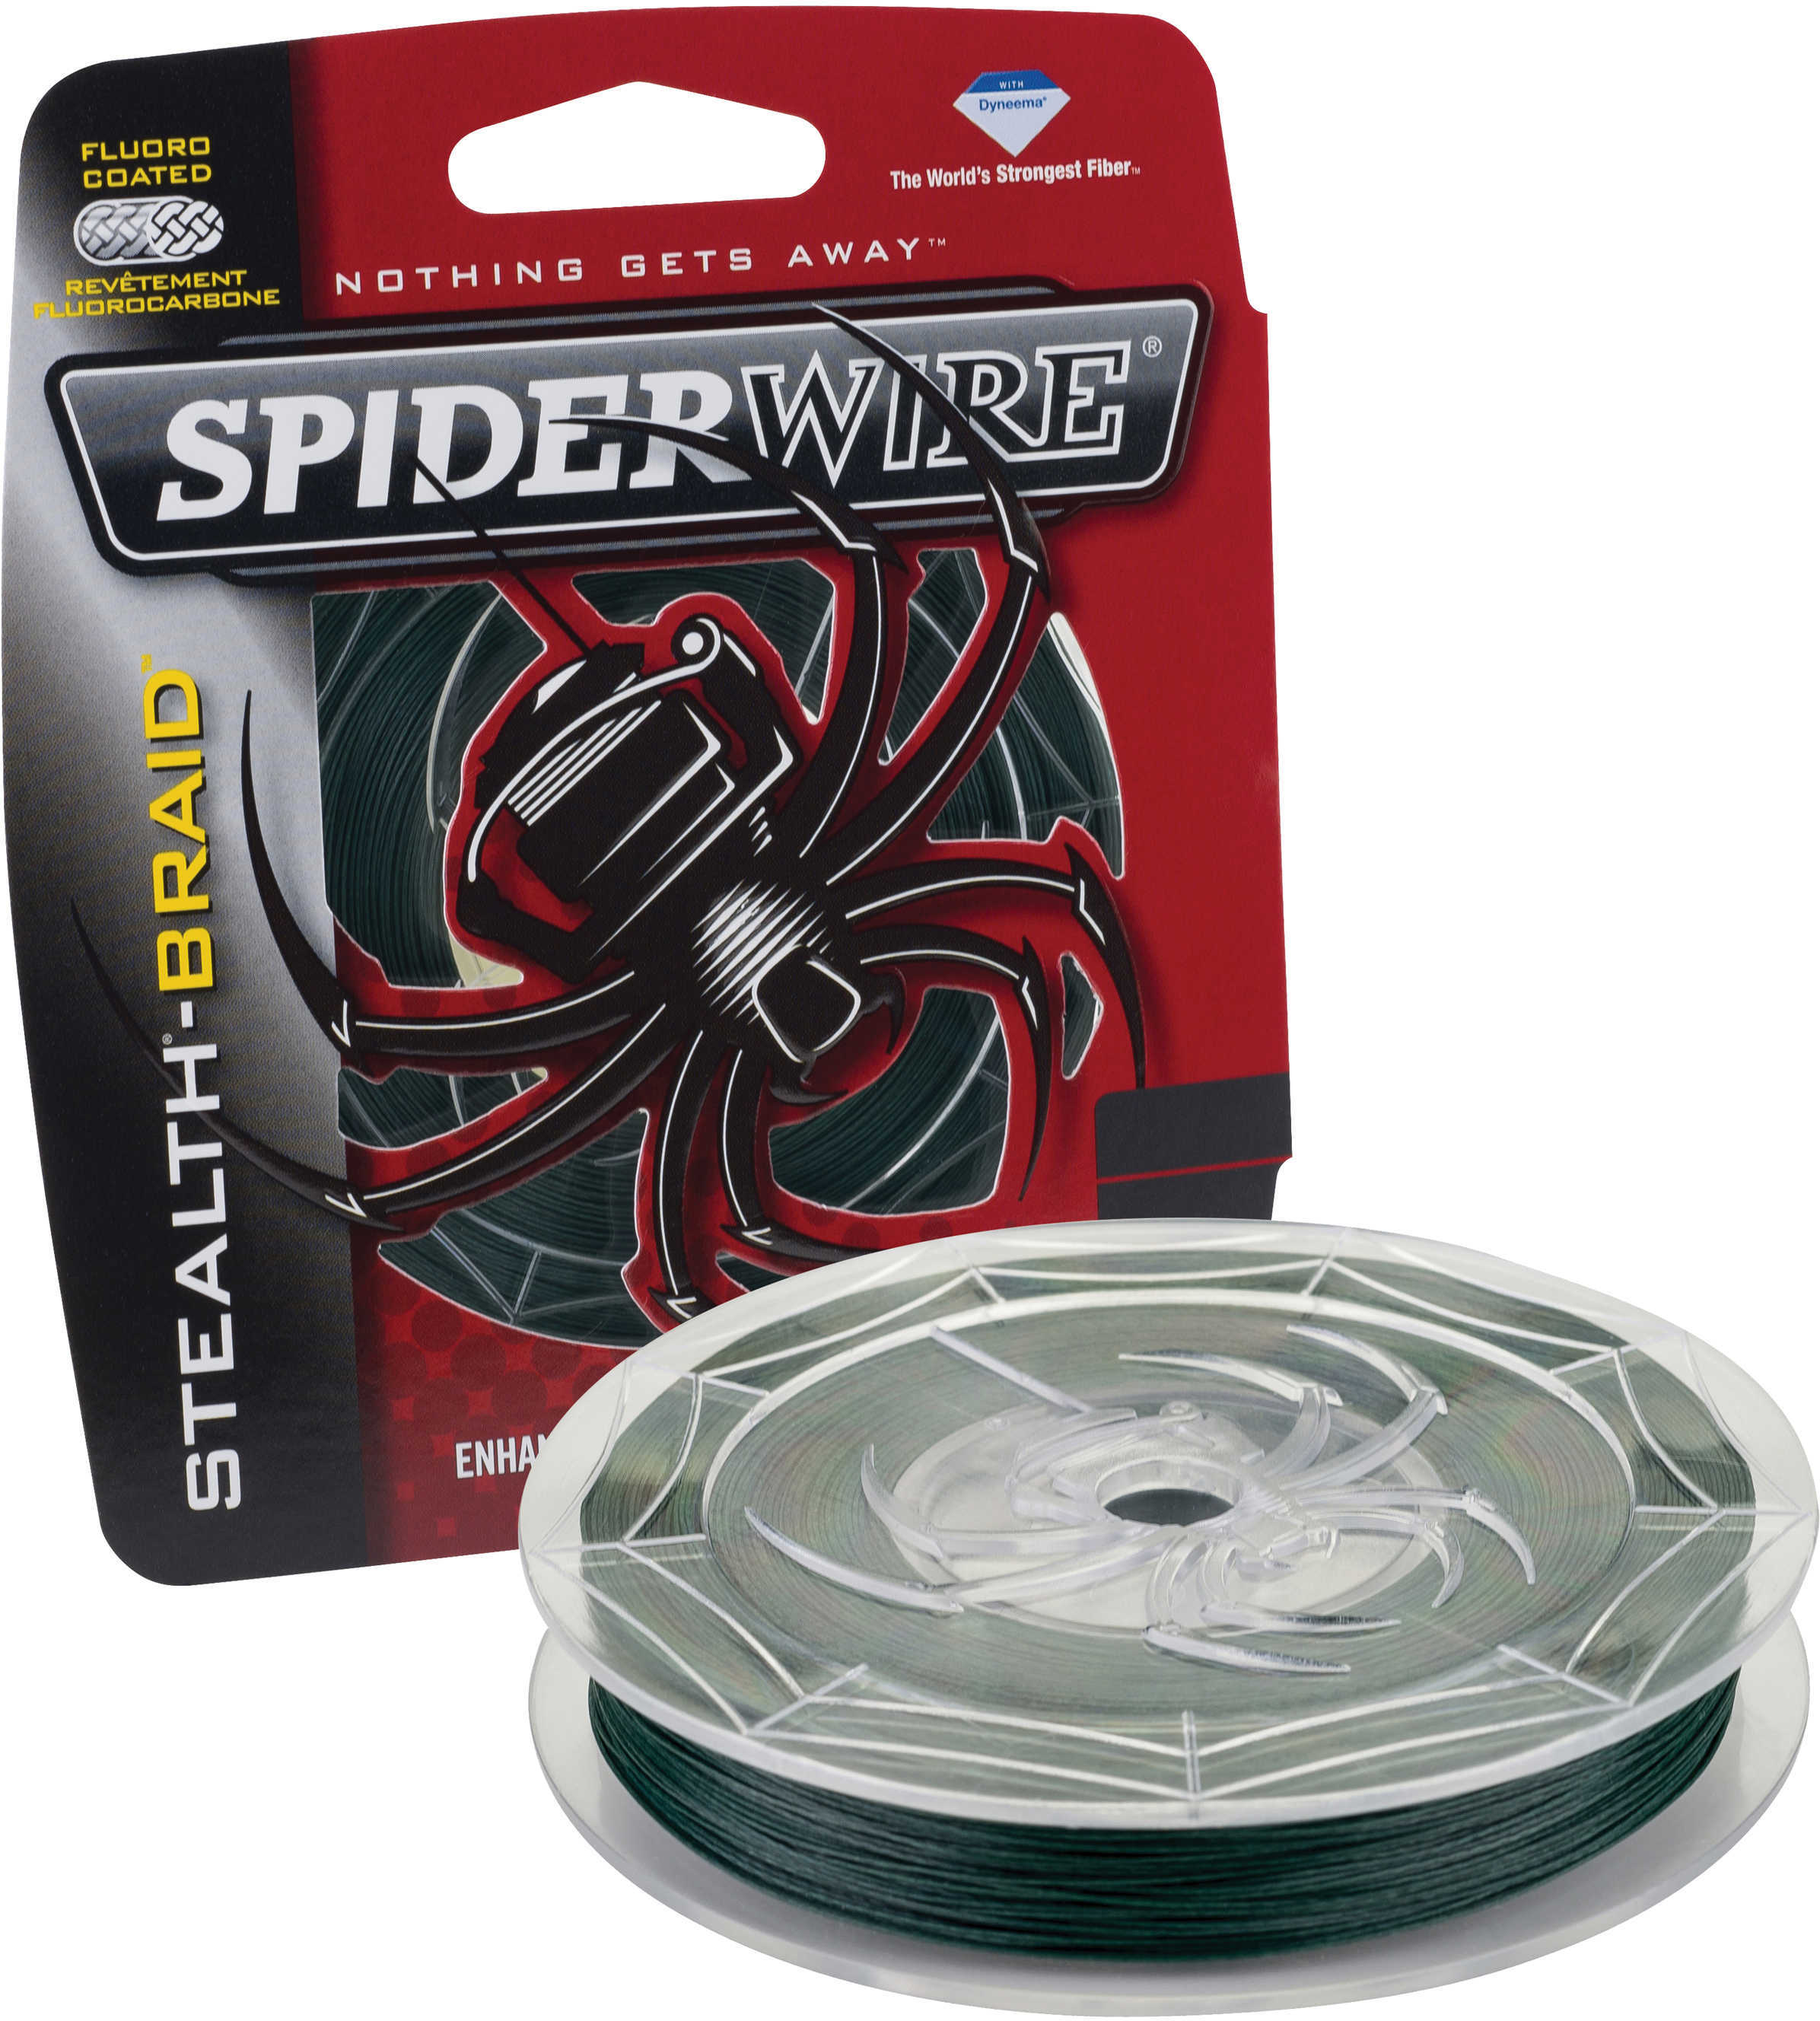 Spiderwire Stealth Braid, Moss Green 20 lb, 500 Yards Md: 1339757